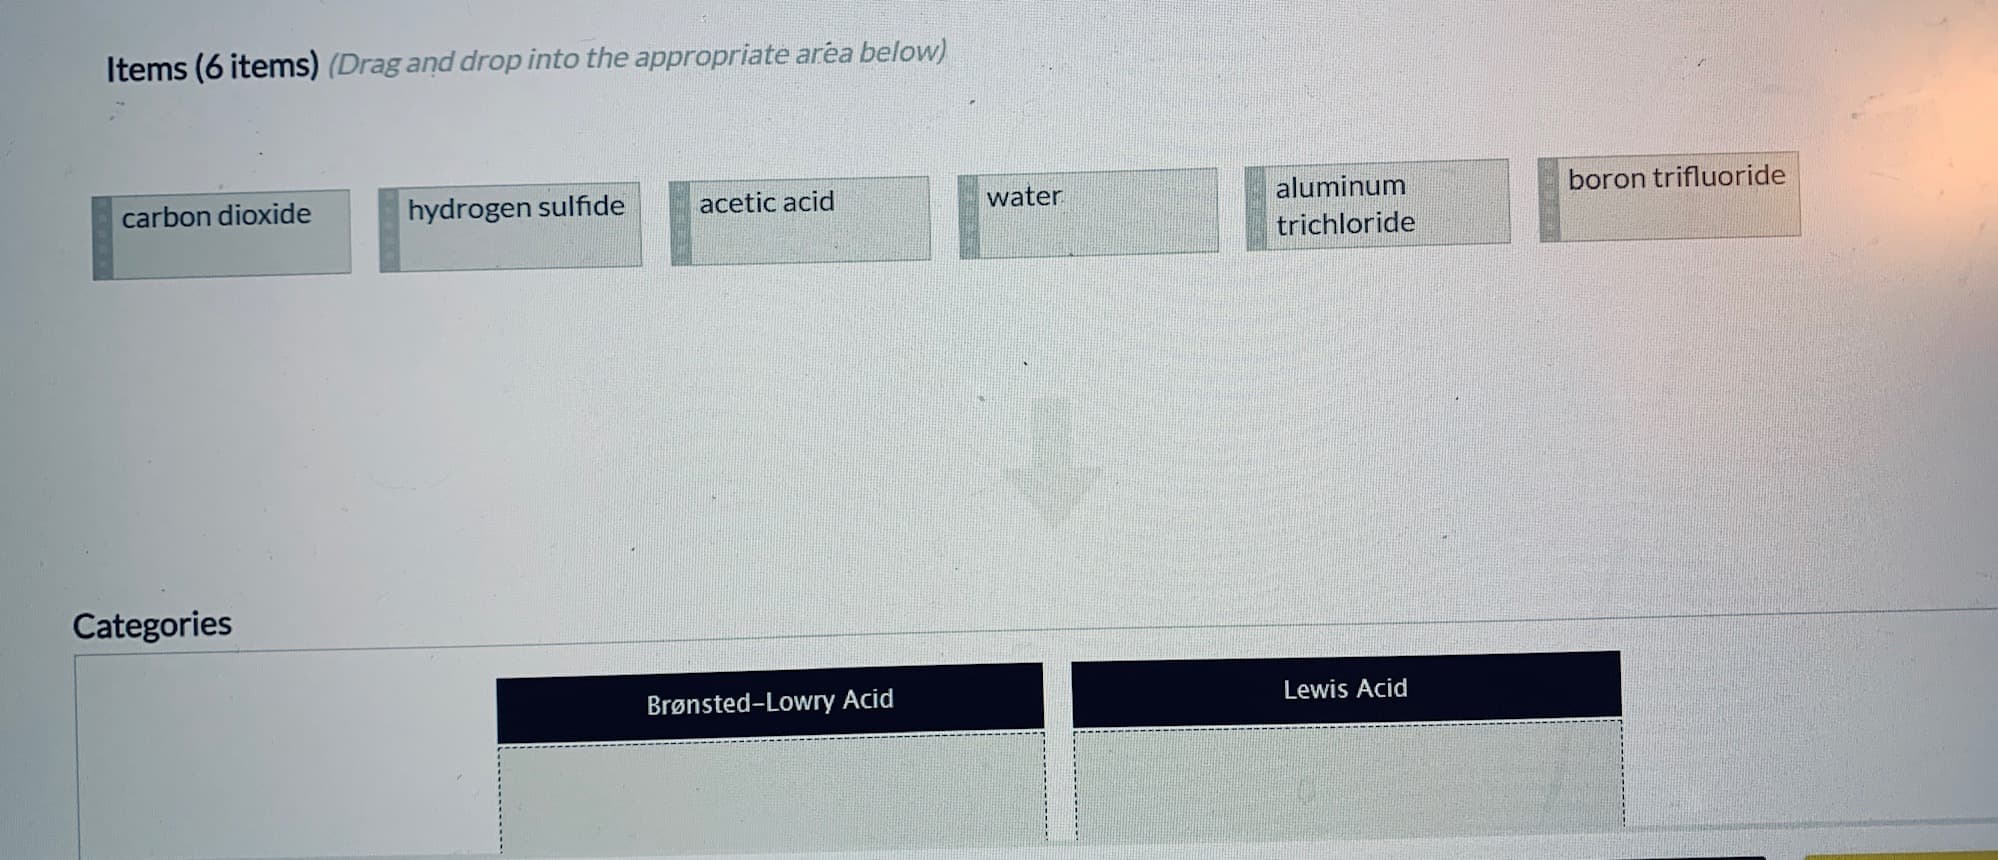 carbon dioxide
hydrogen sulfide
acetic acid
water
aluminum
boron trifluoride
trichloride
Categories
Brønsted-Lowry Acid
Lewis Acid
